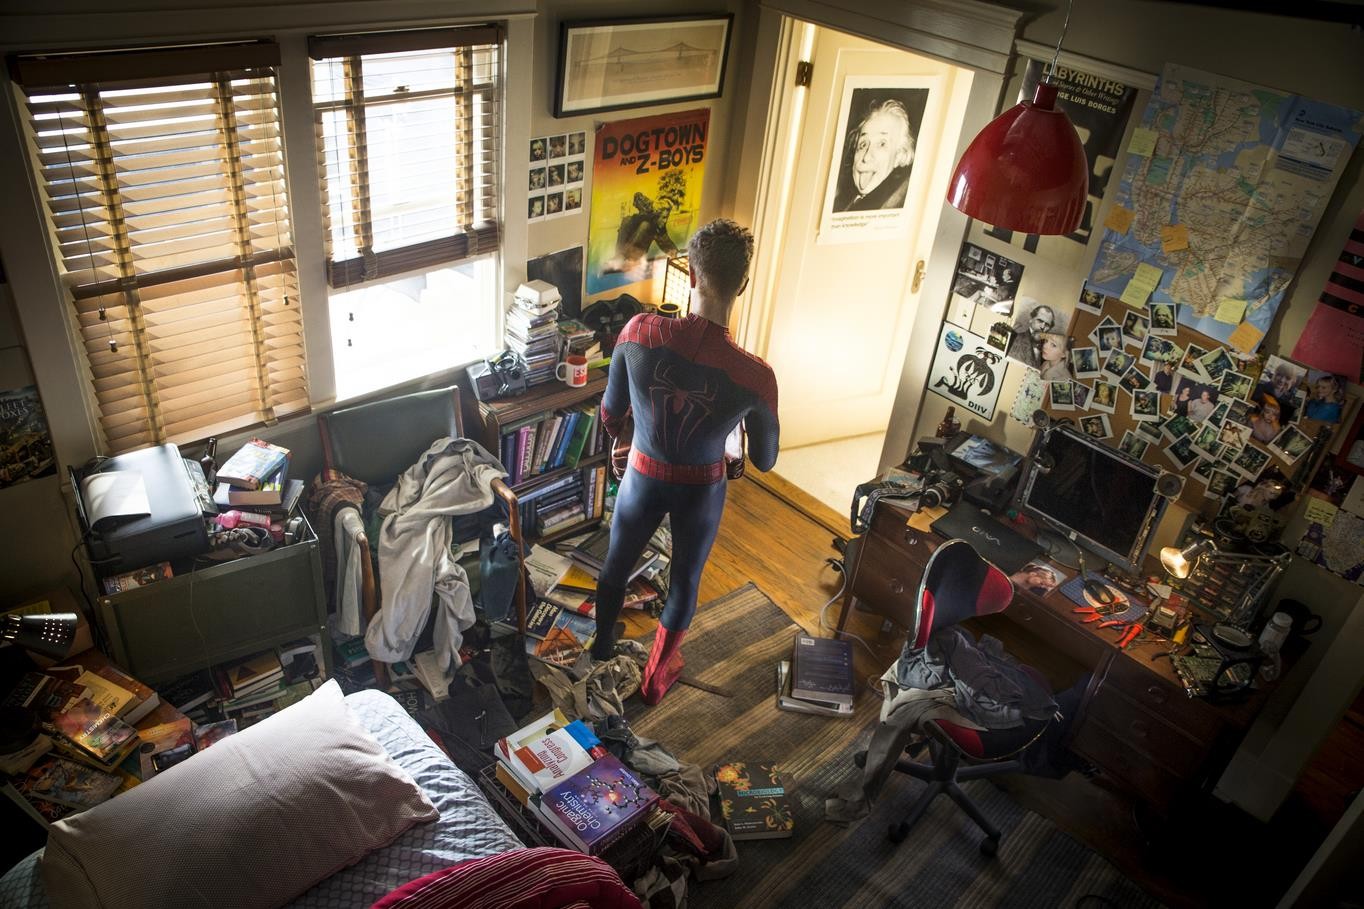 Spider Man Peter Parker Room Clutter 1364x909